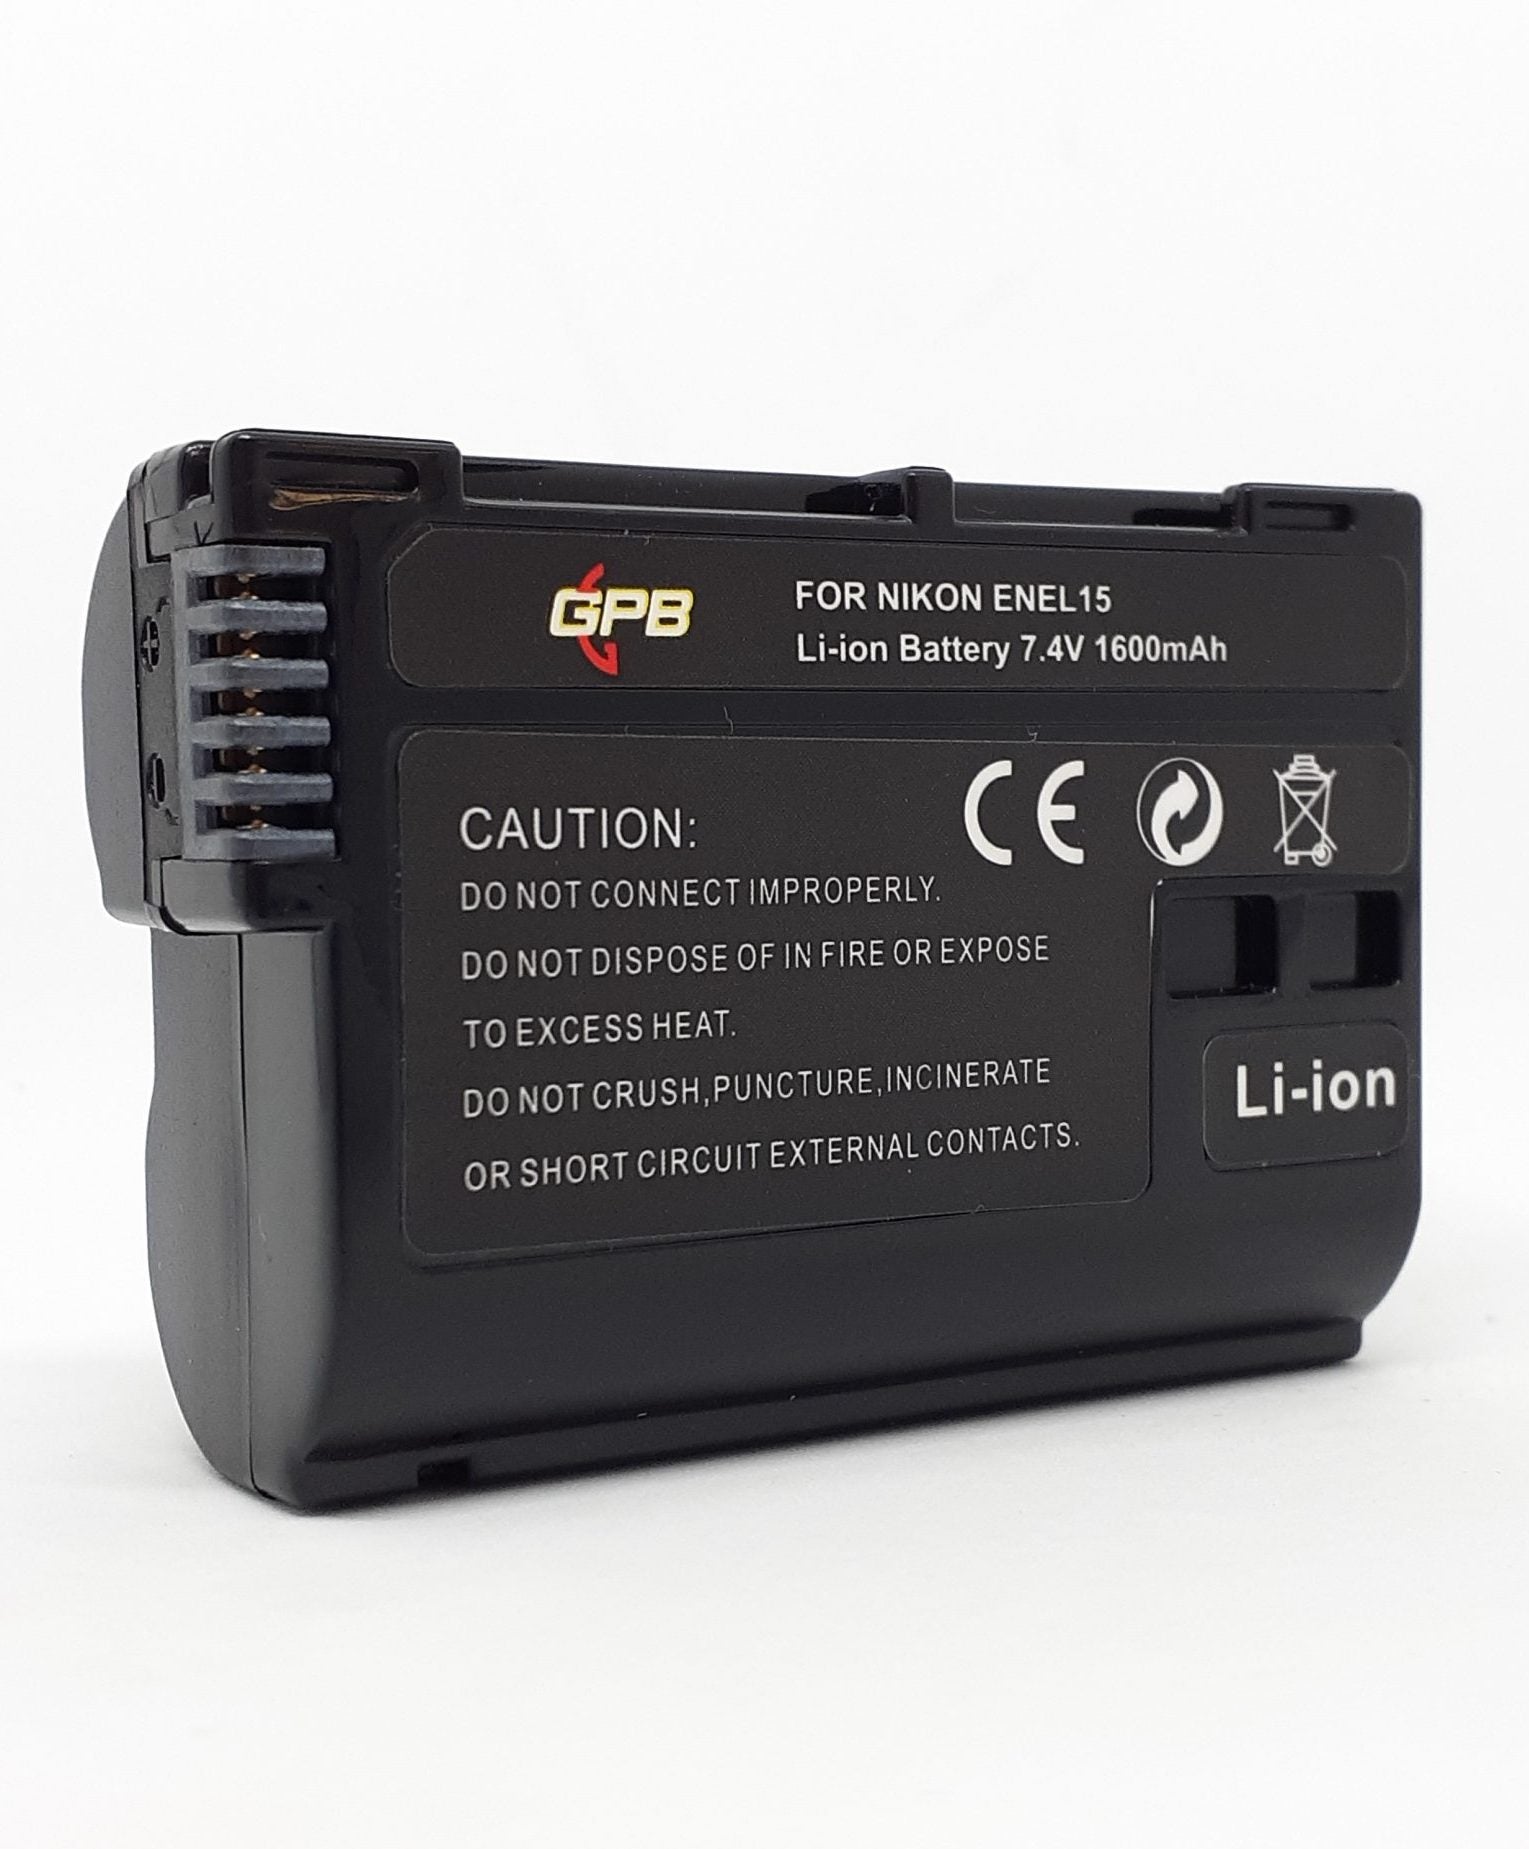 GPB Rechargeable Battery for Nikon EN-EL15 Camera tek